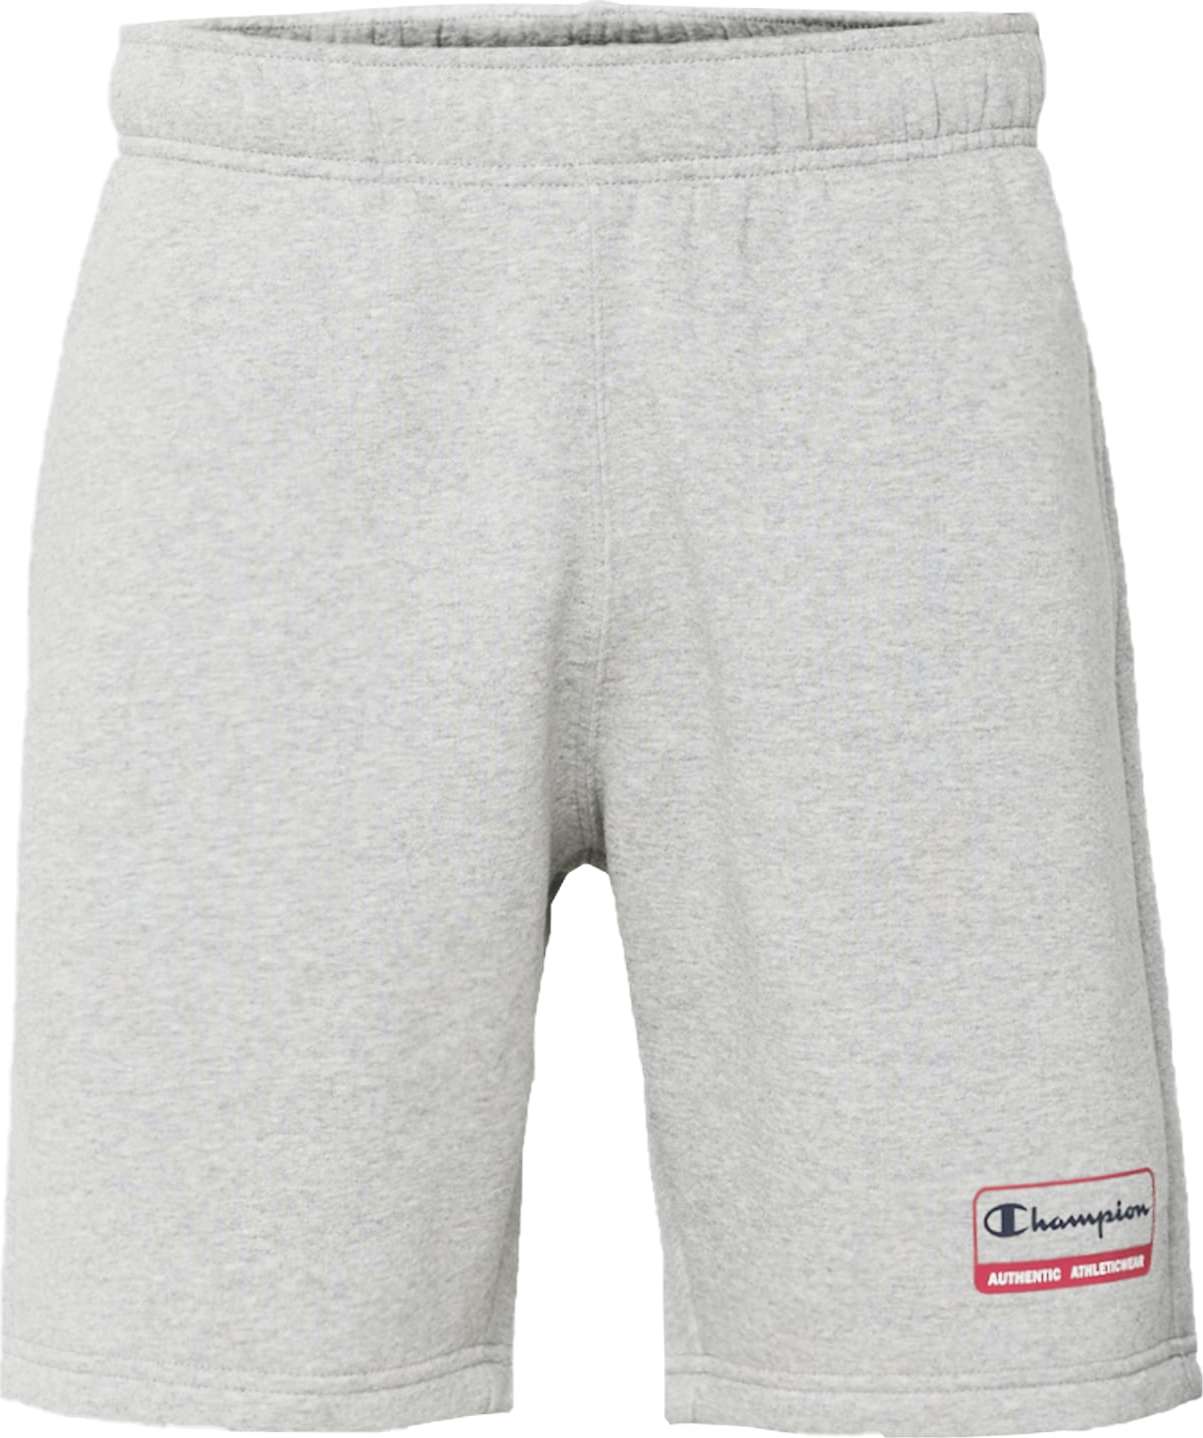 Kalhoty Champion Authentic Athletic Apparel šedý melír / červená / bílá